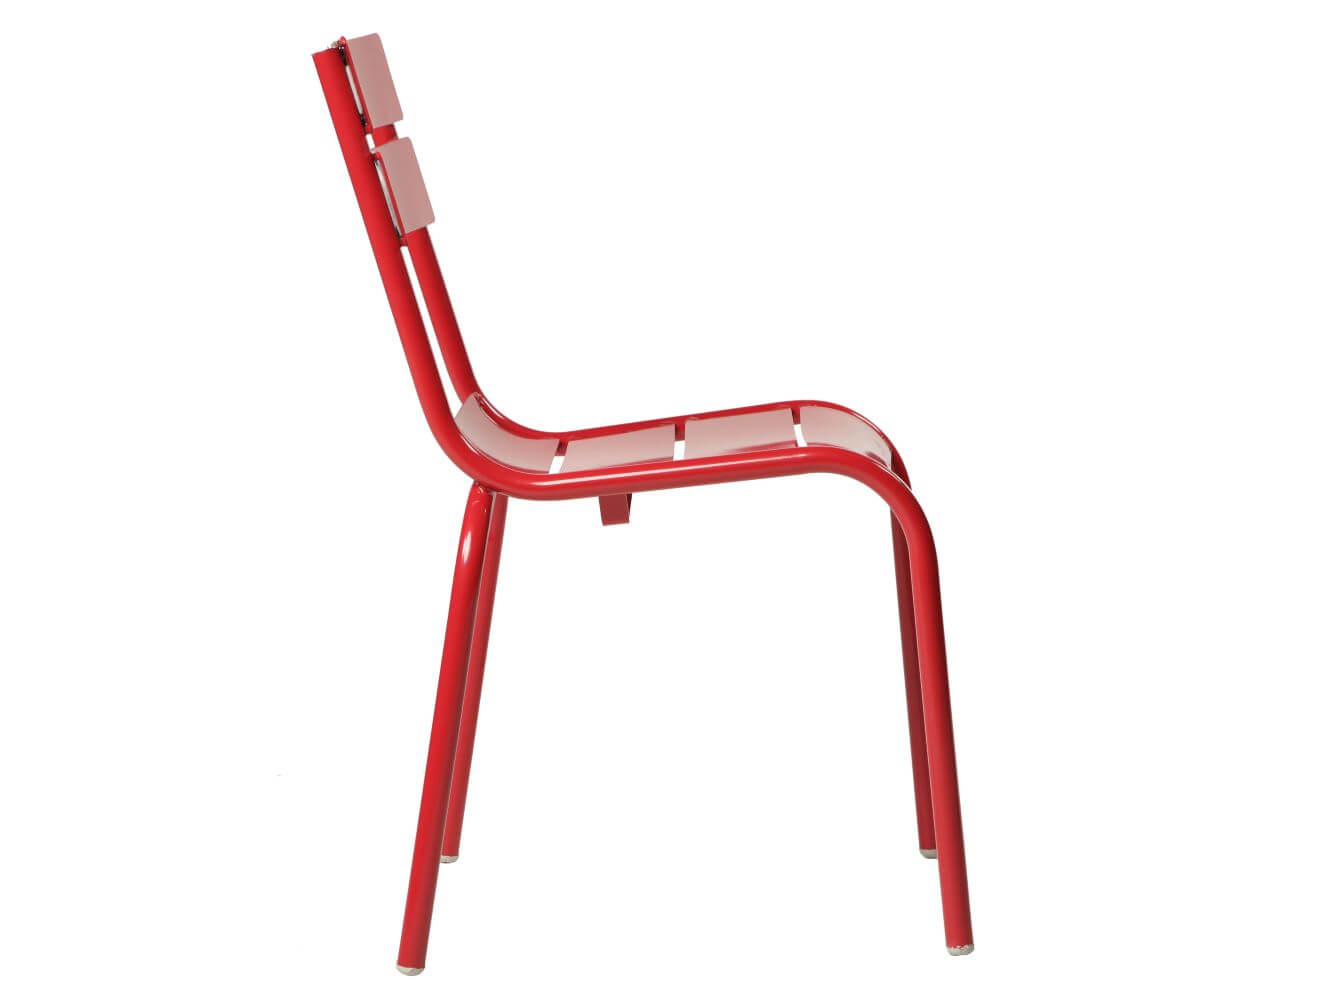 Porto aluminium chair in red, 4 leg base, side view